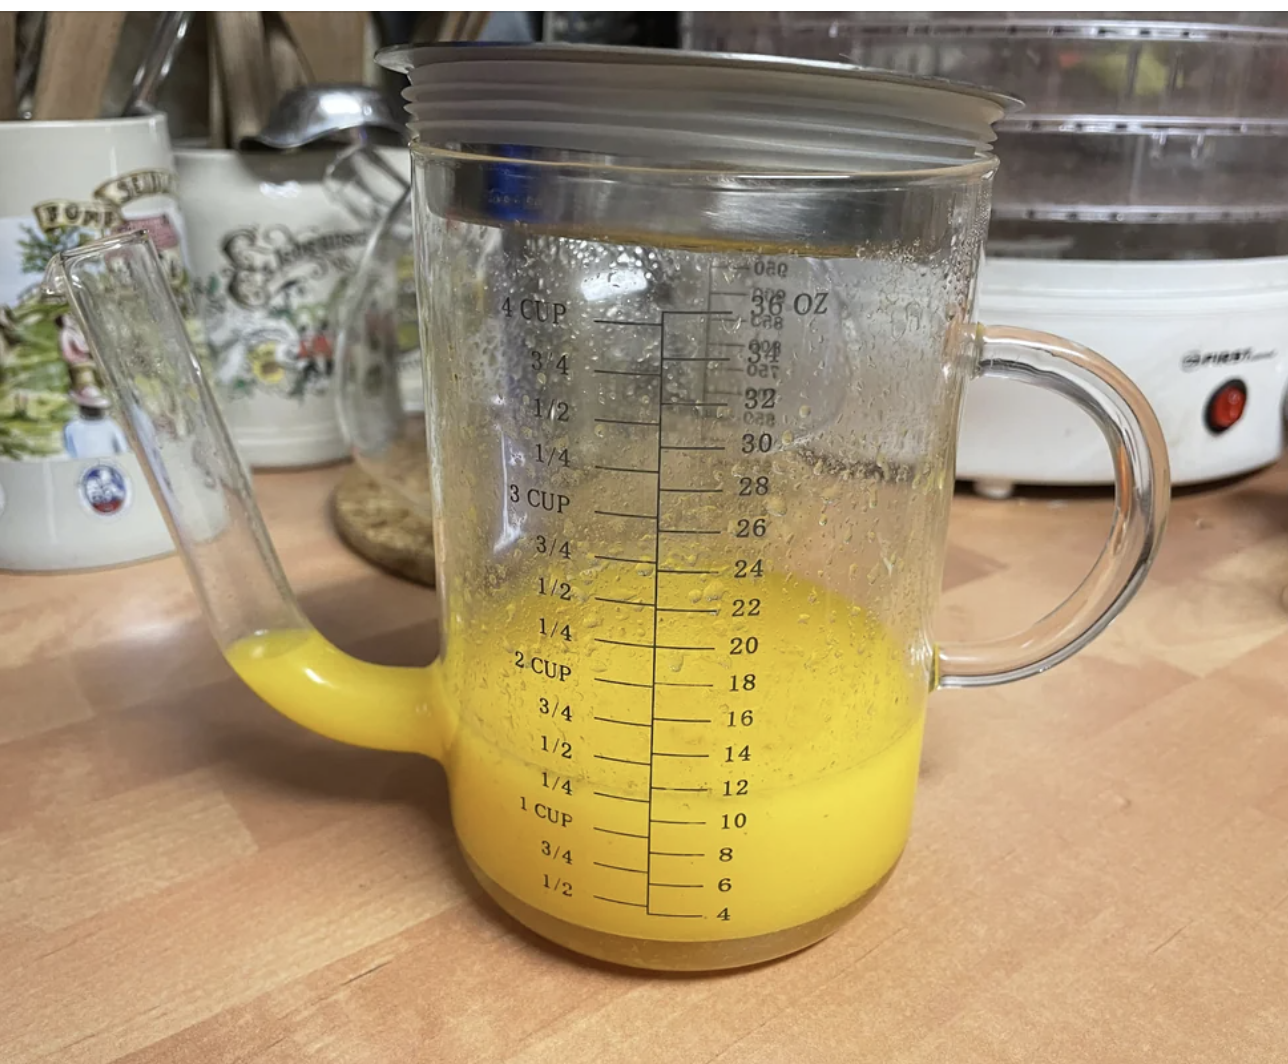 Orange liquid in a 4-cup measuring pitcher